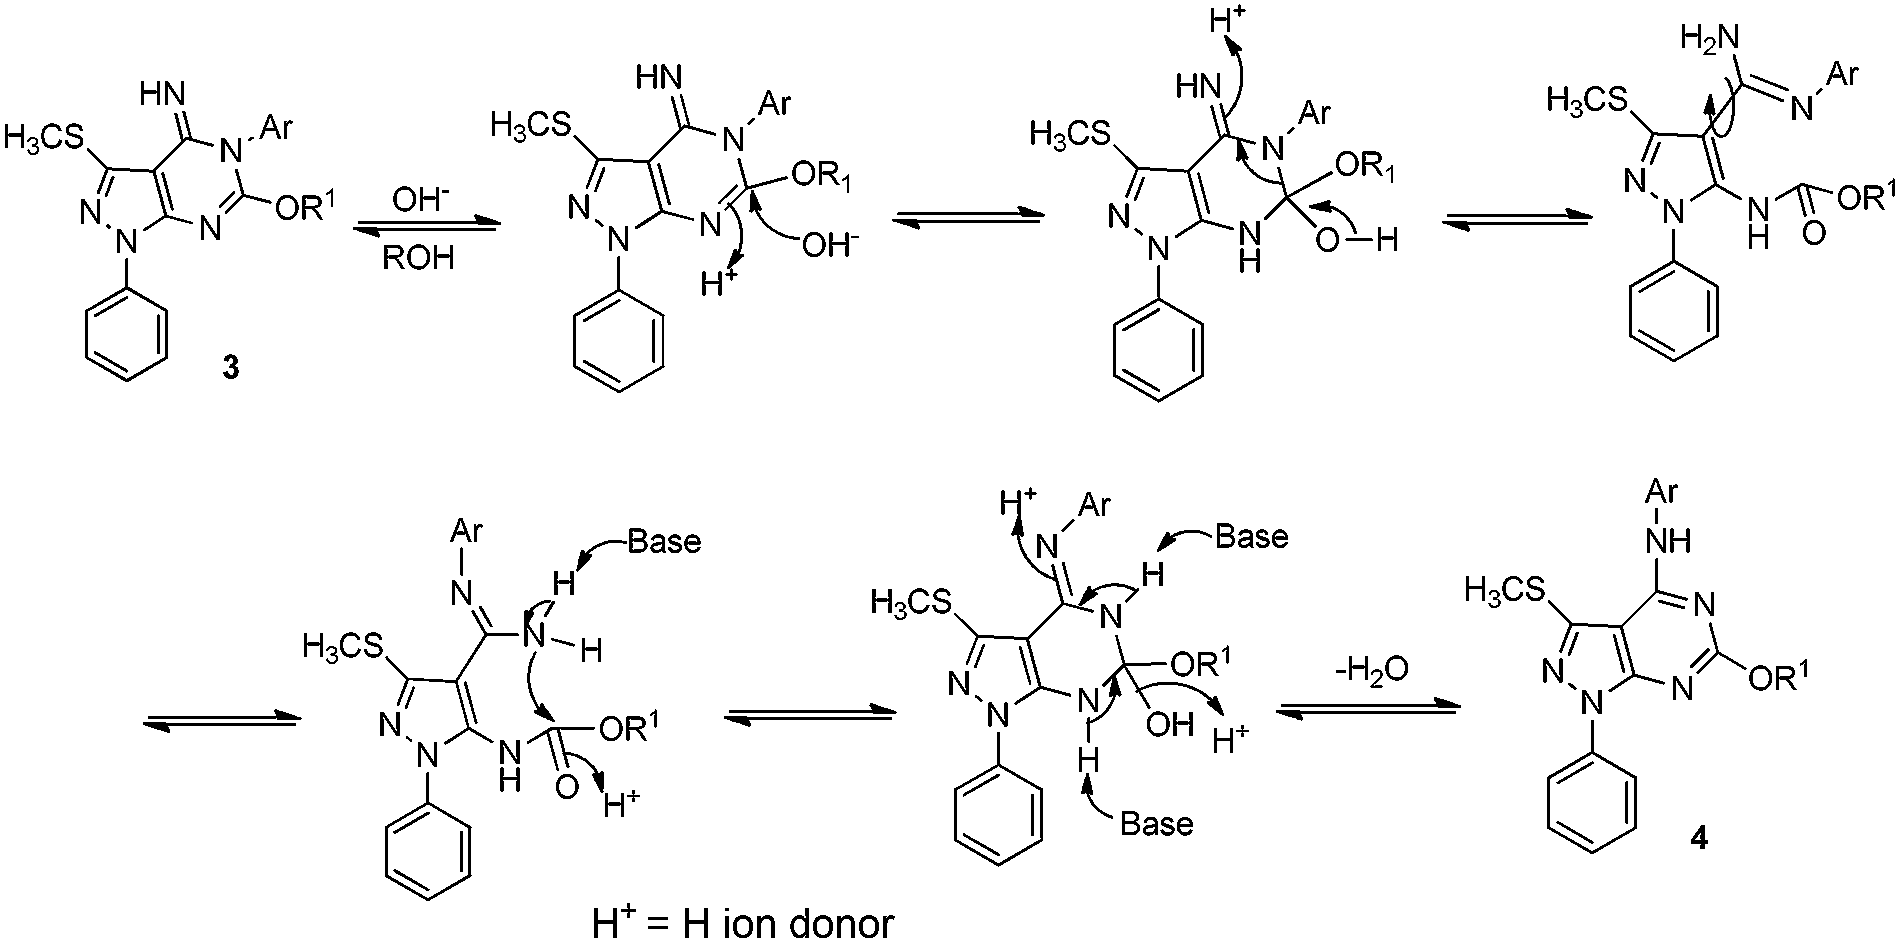 Tunable regioselective synthesis of pyrazolo[3,4- d ]pyrimidine derivatives  via aza-Wittig cyclization and dimroth-type rearrangement - RSC Advances  (RSC Publishing) DOI:10.1039/C4RA15777J